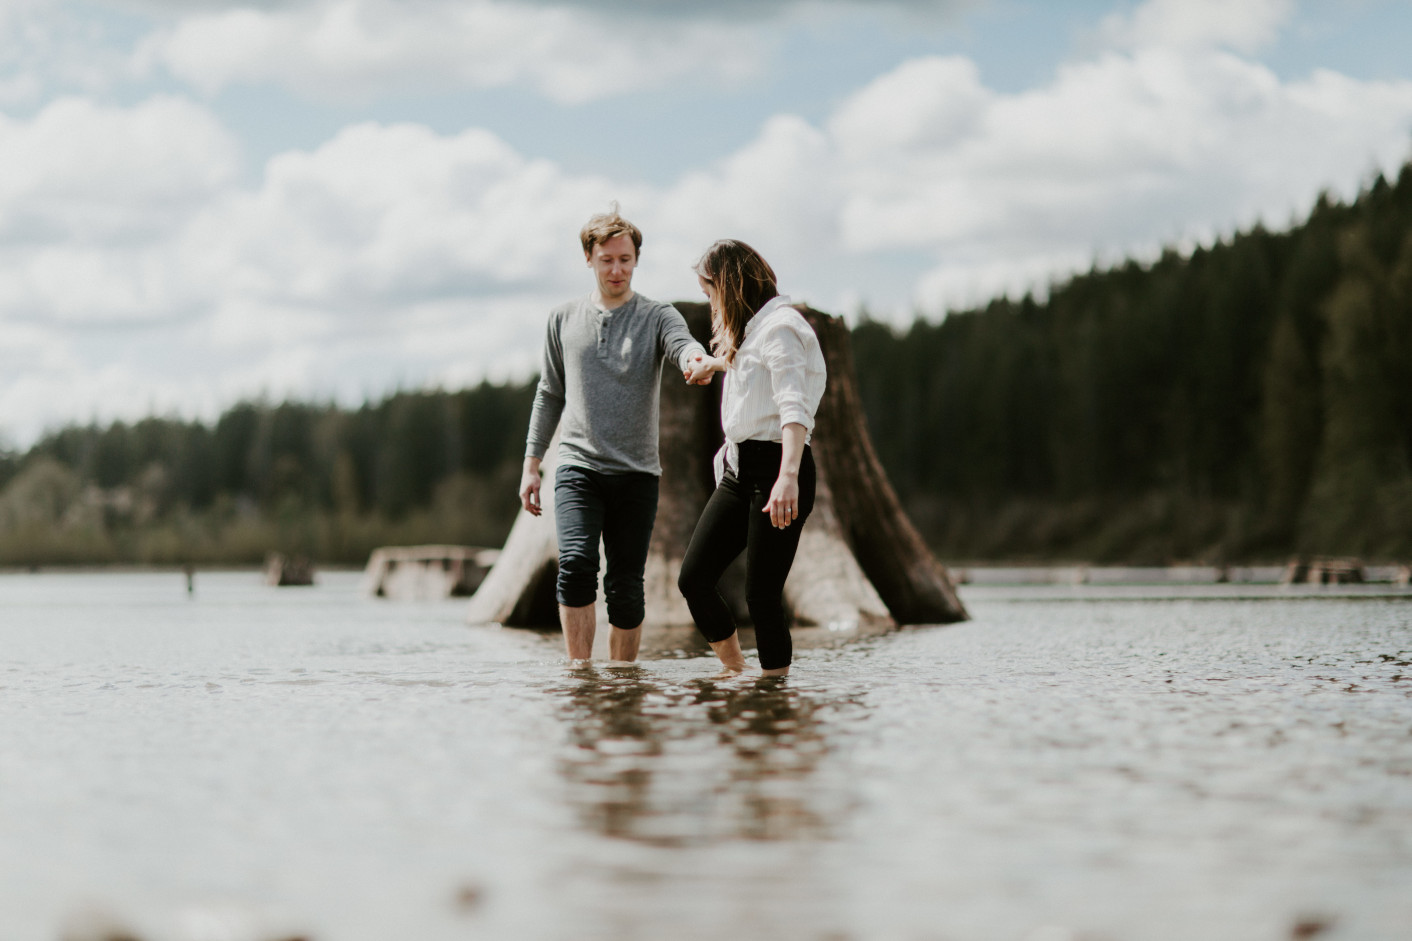 Janelle and Adam wade in the water at Rattlesnake Lake. Adventure engagement session at Rattlesnake Lake, Washington by Sienna Plus Josh.